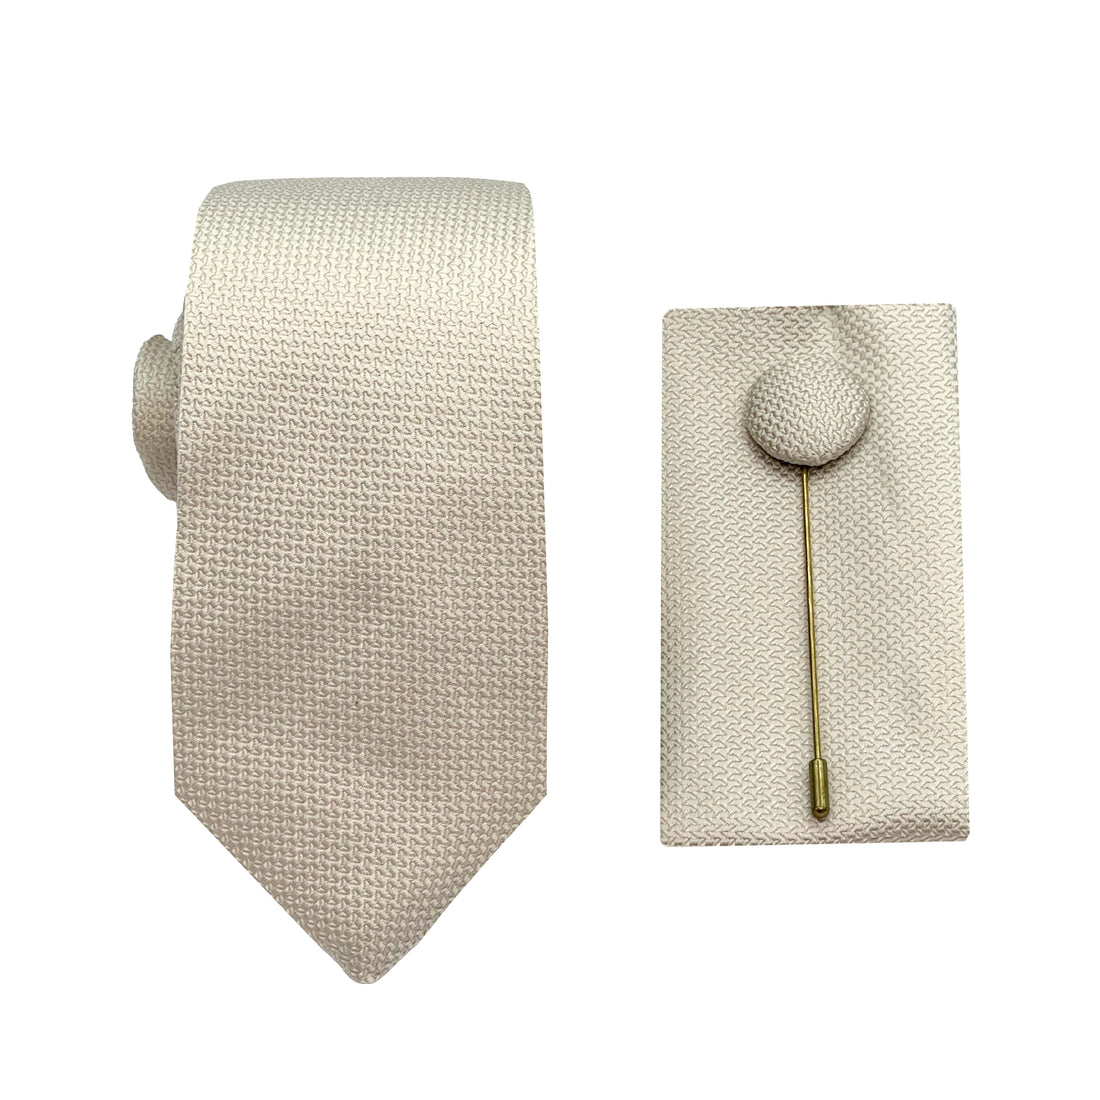 JAOXFORDSLIMCOMBO James Adelin Luxury Oxford Weave 6.5cm Width Tie/Pocket Square/Lapel Pin Combo Set